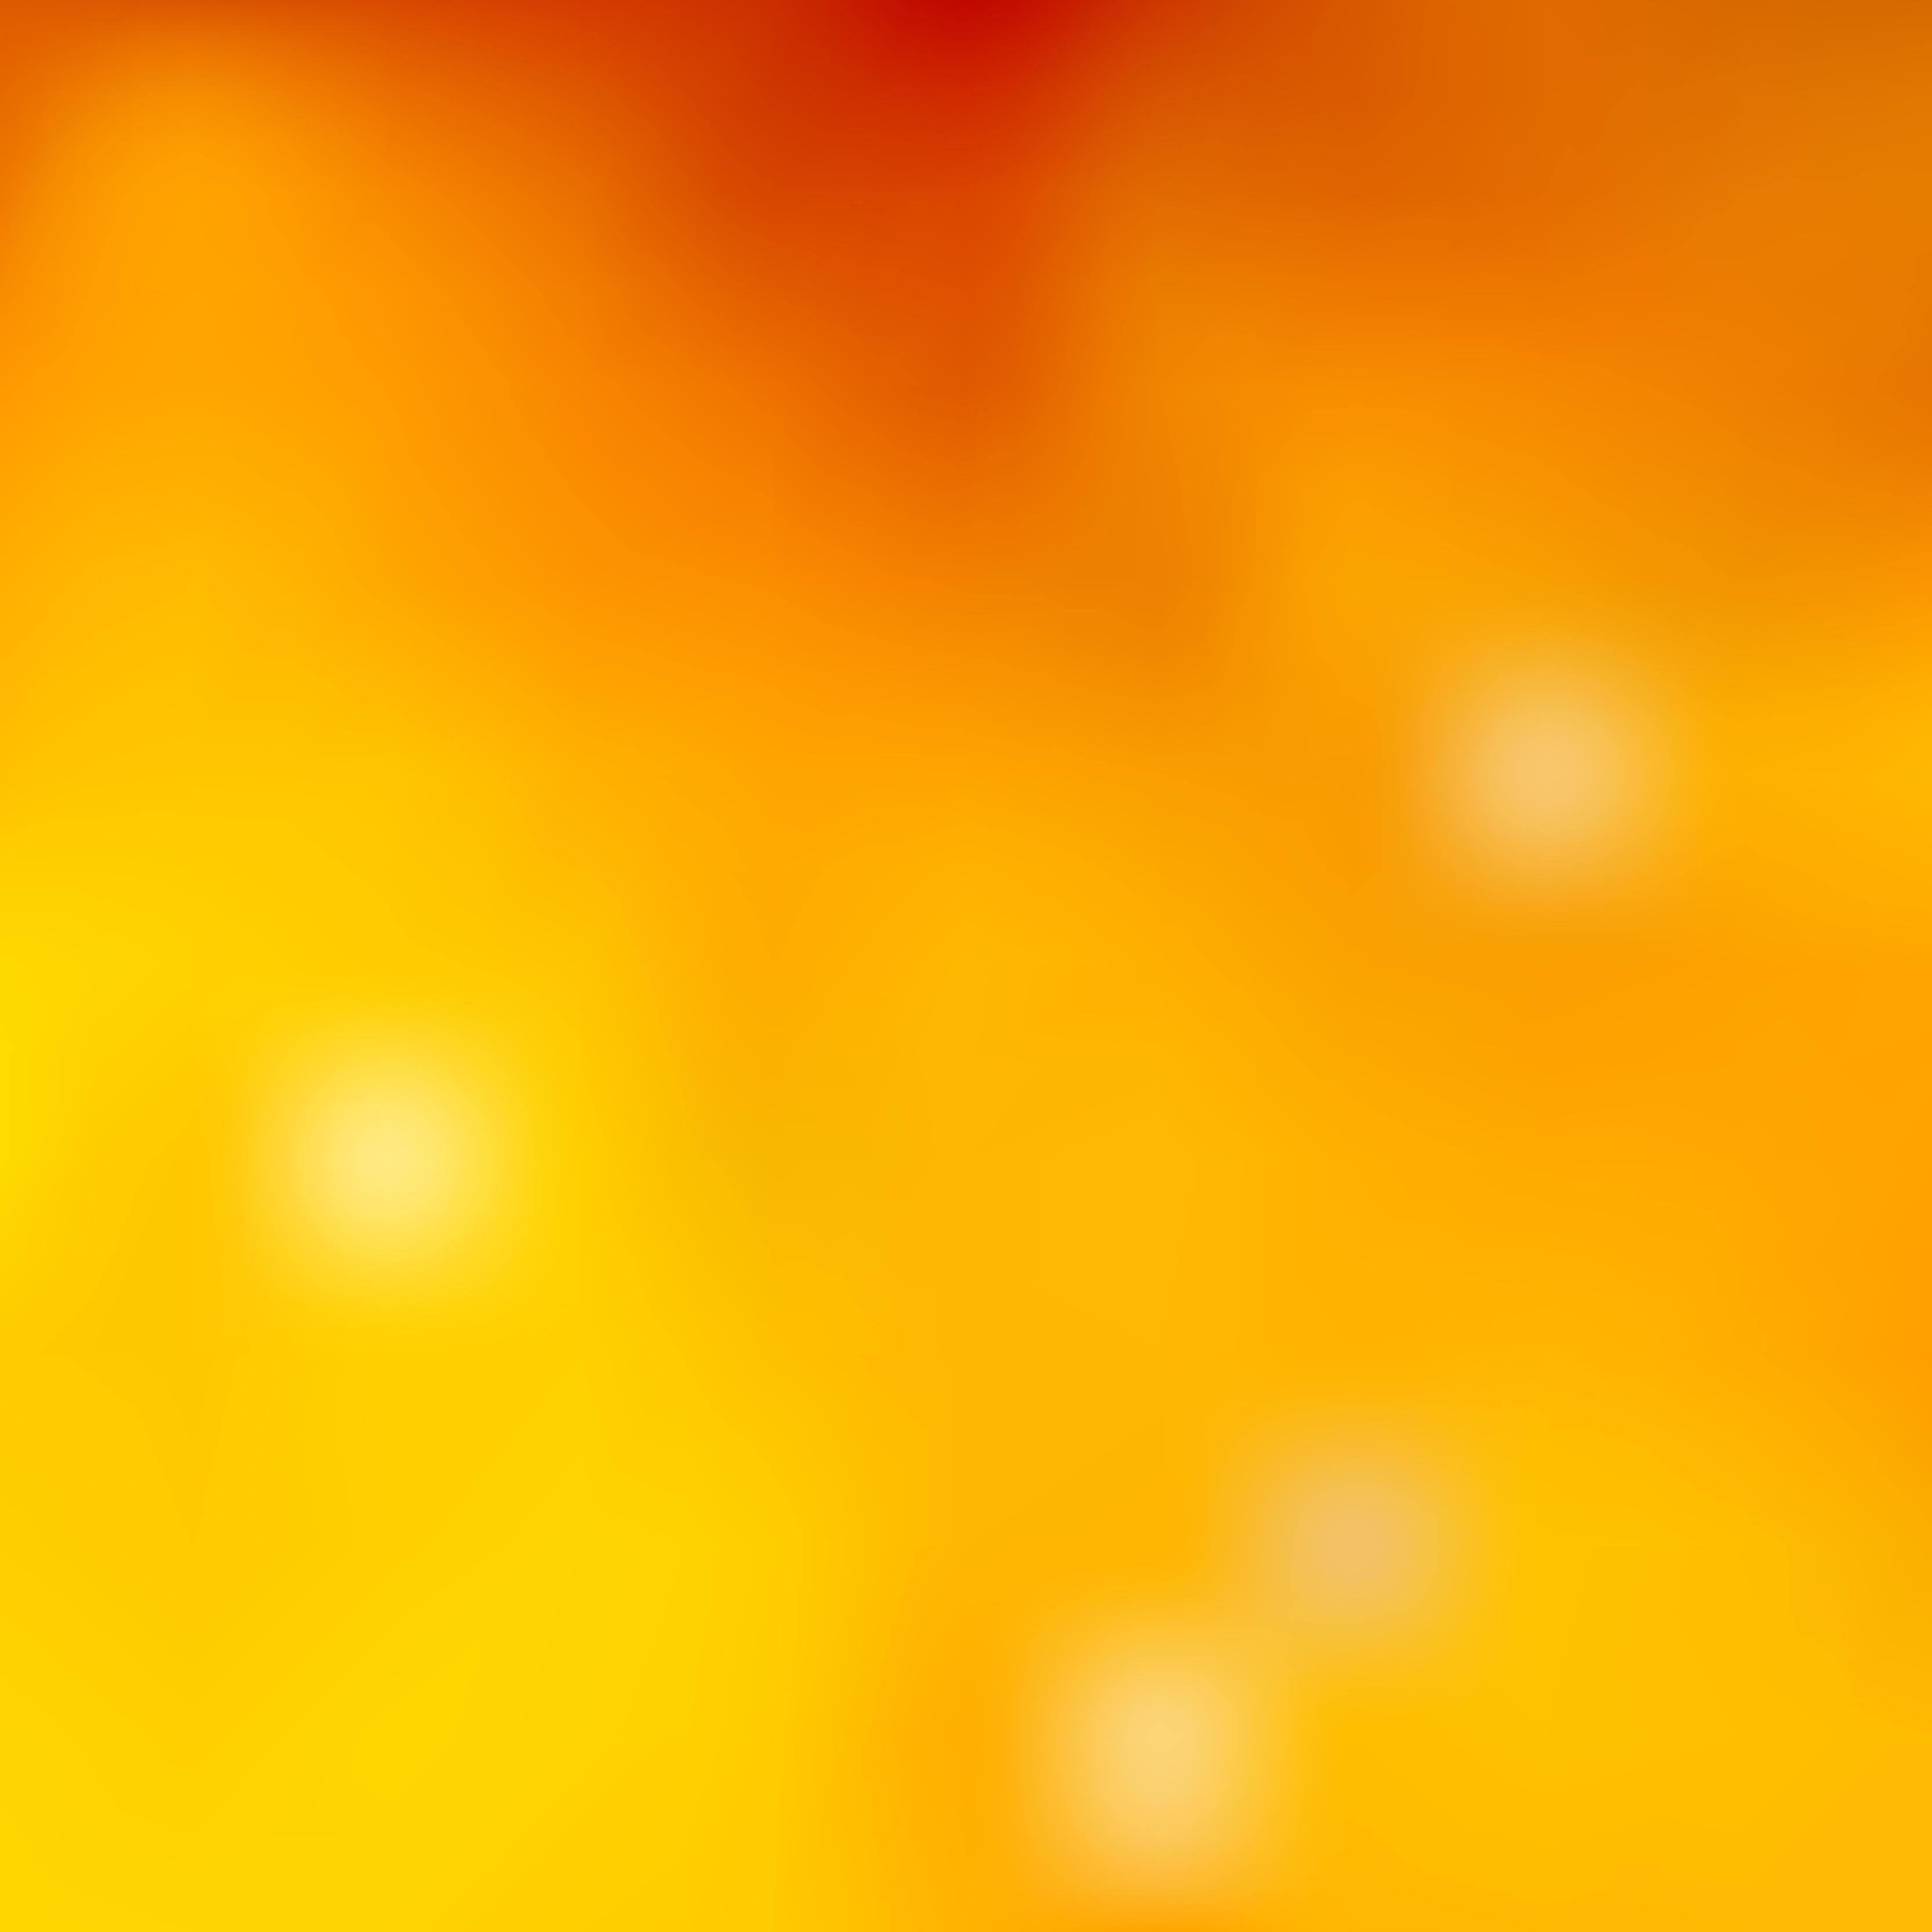 Orange Colour Background Image Wallpaper Image